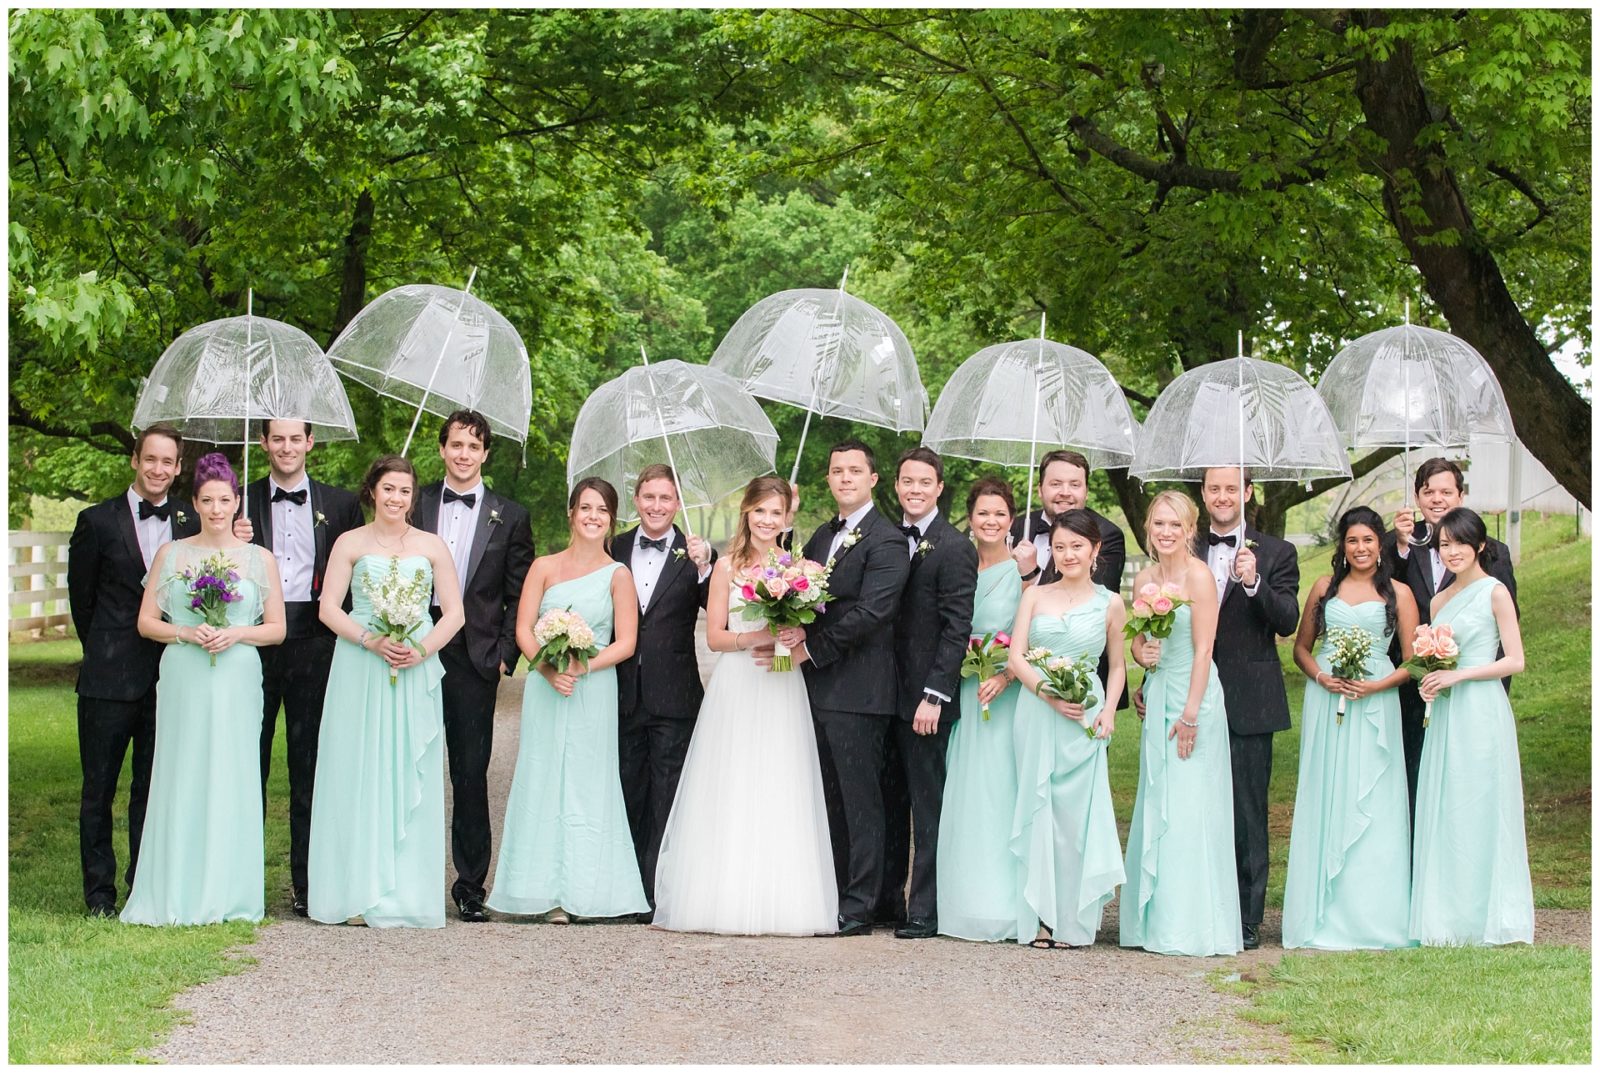 Rain on your wedding day at Shaker Village in Harrodsburg Kentucky.